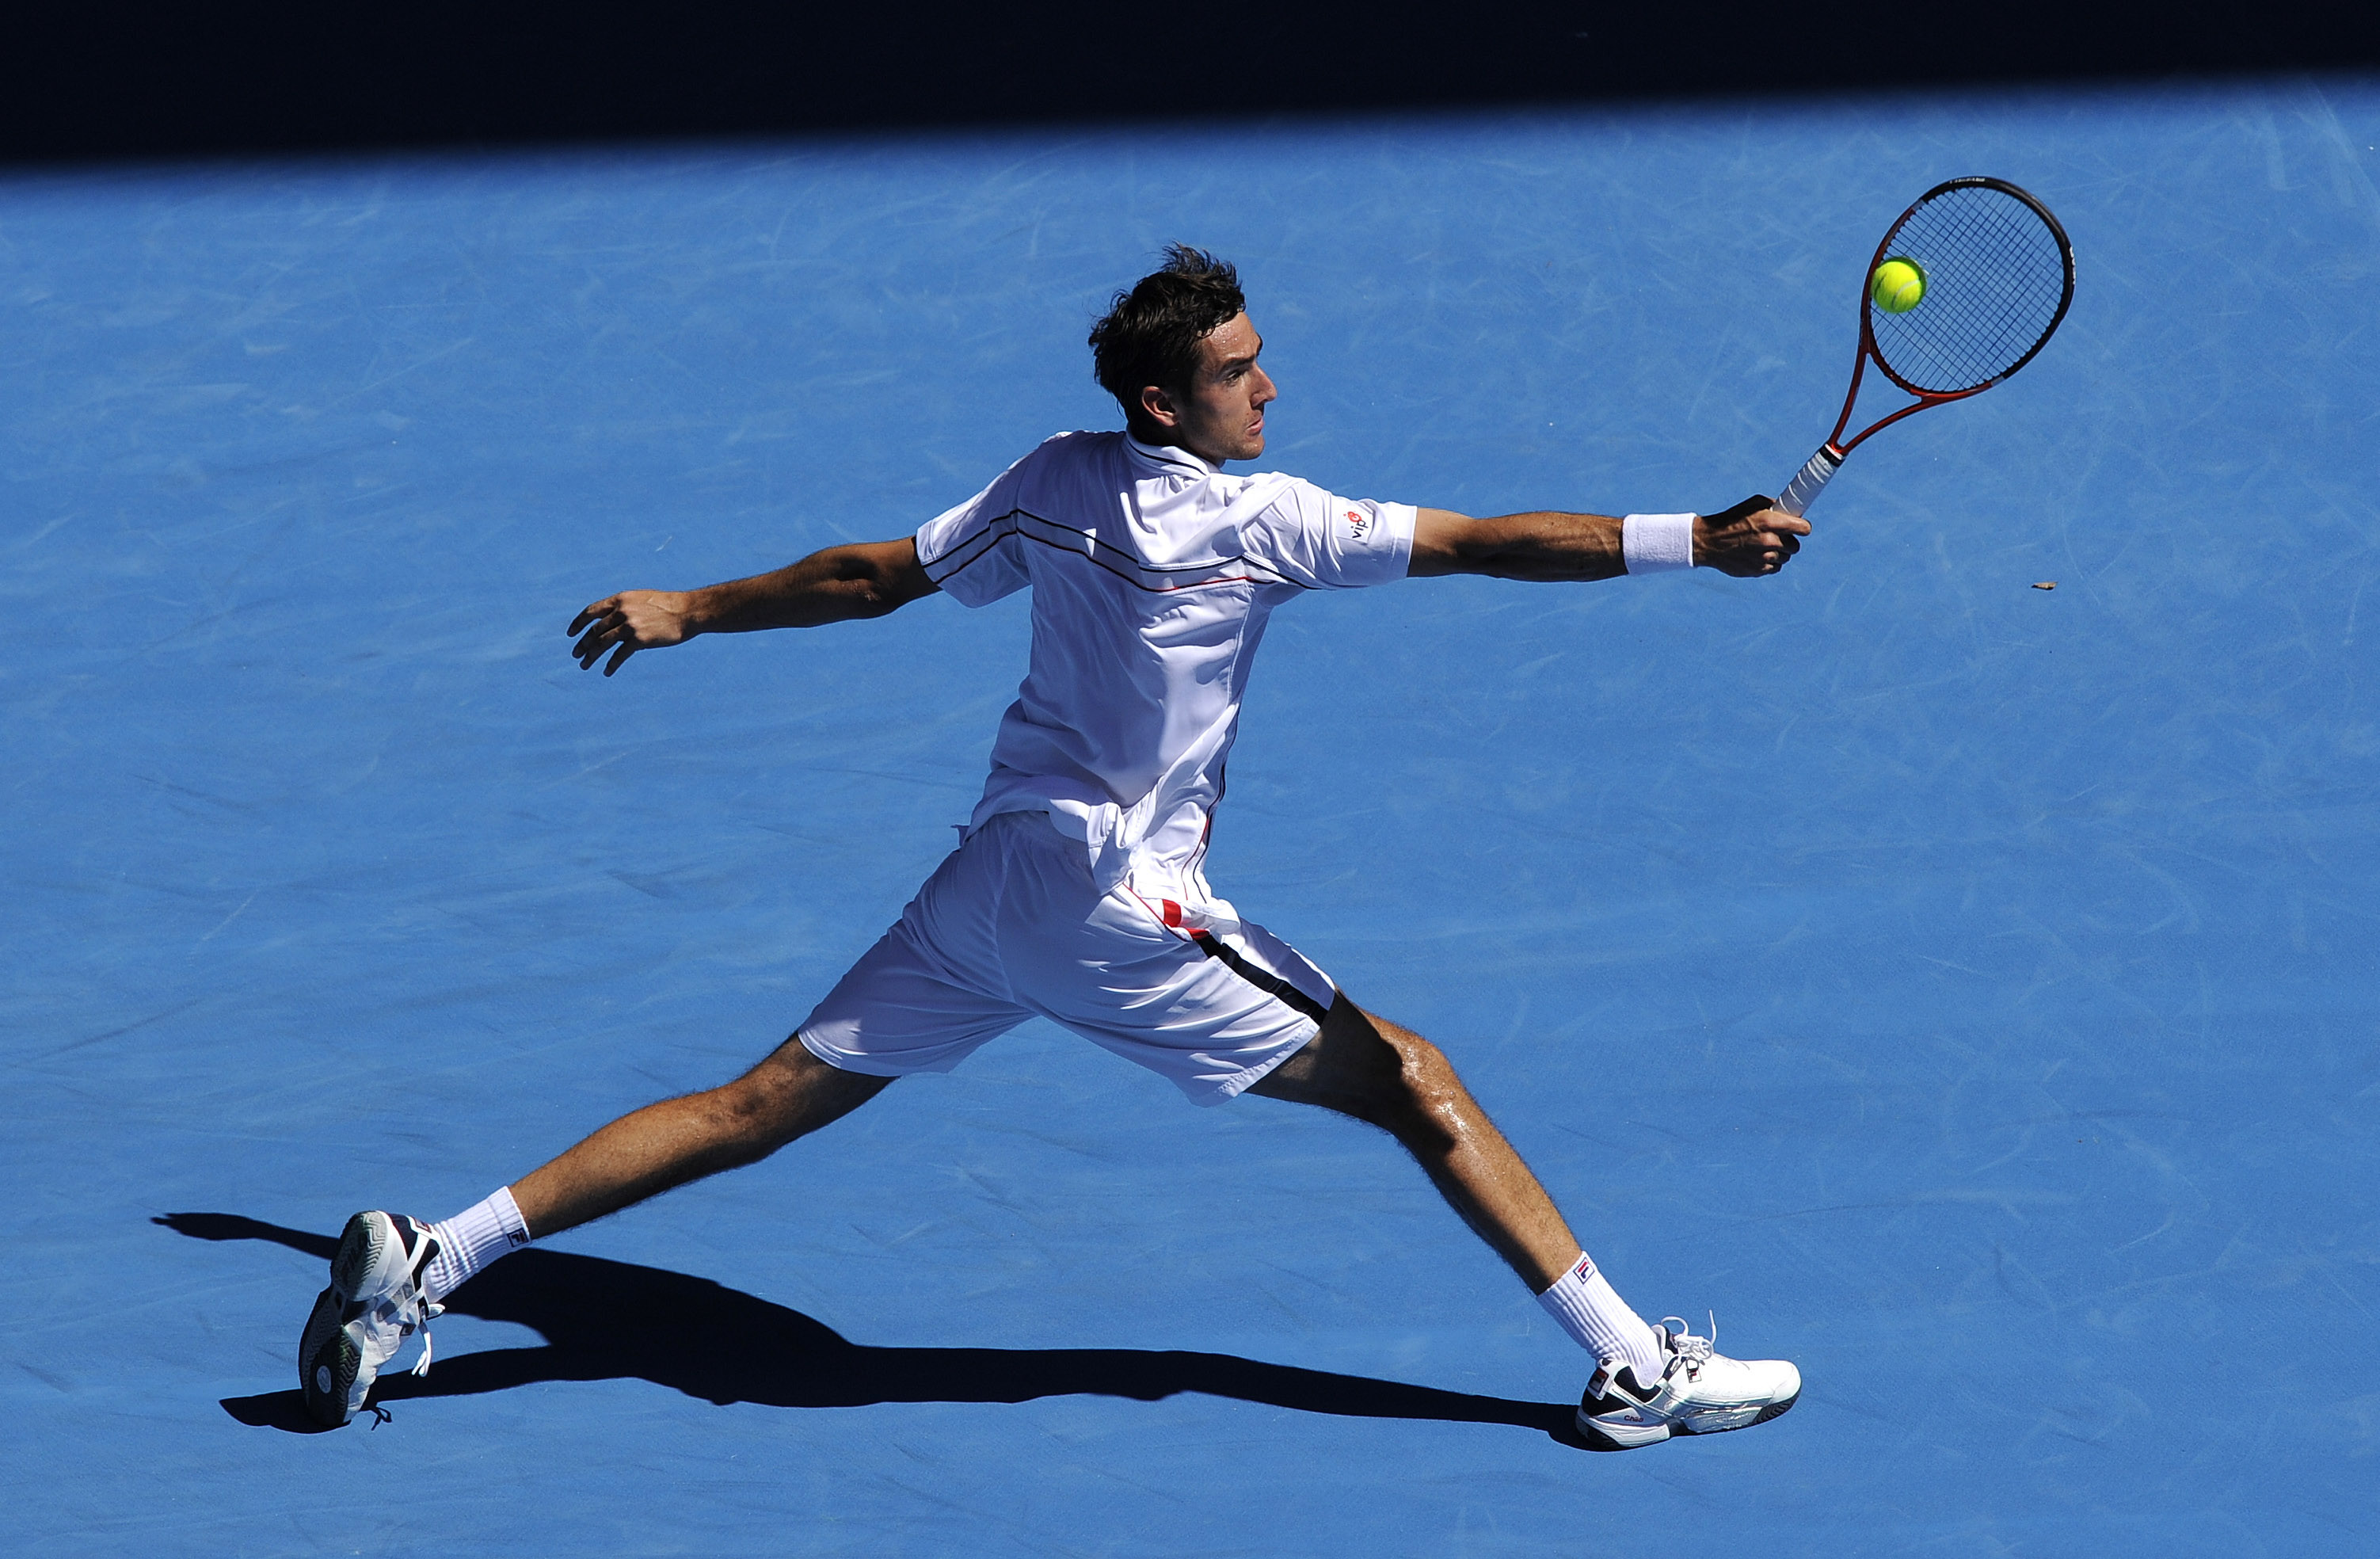 Australian Open, Juan Martin del Potro, Tennis, Andy Roddick, Marin Cilic, Roger Federer, Andy Murray, Kvartsfinal